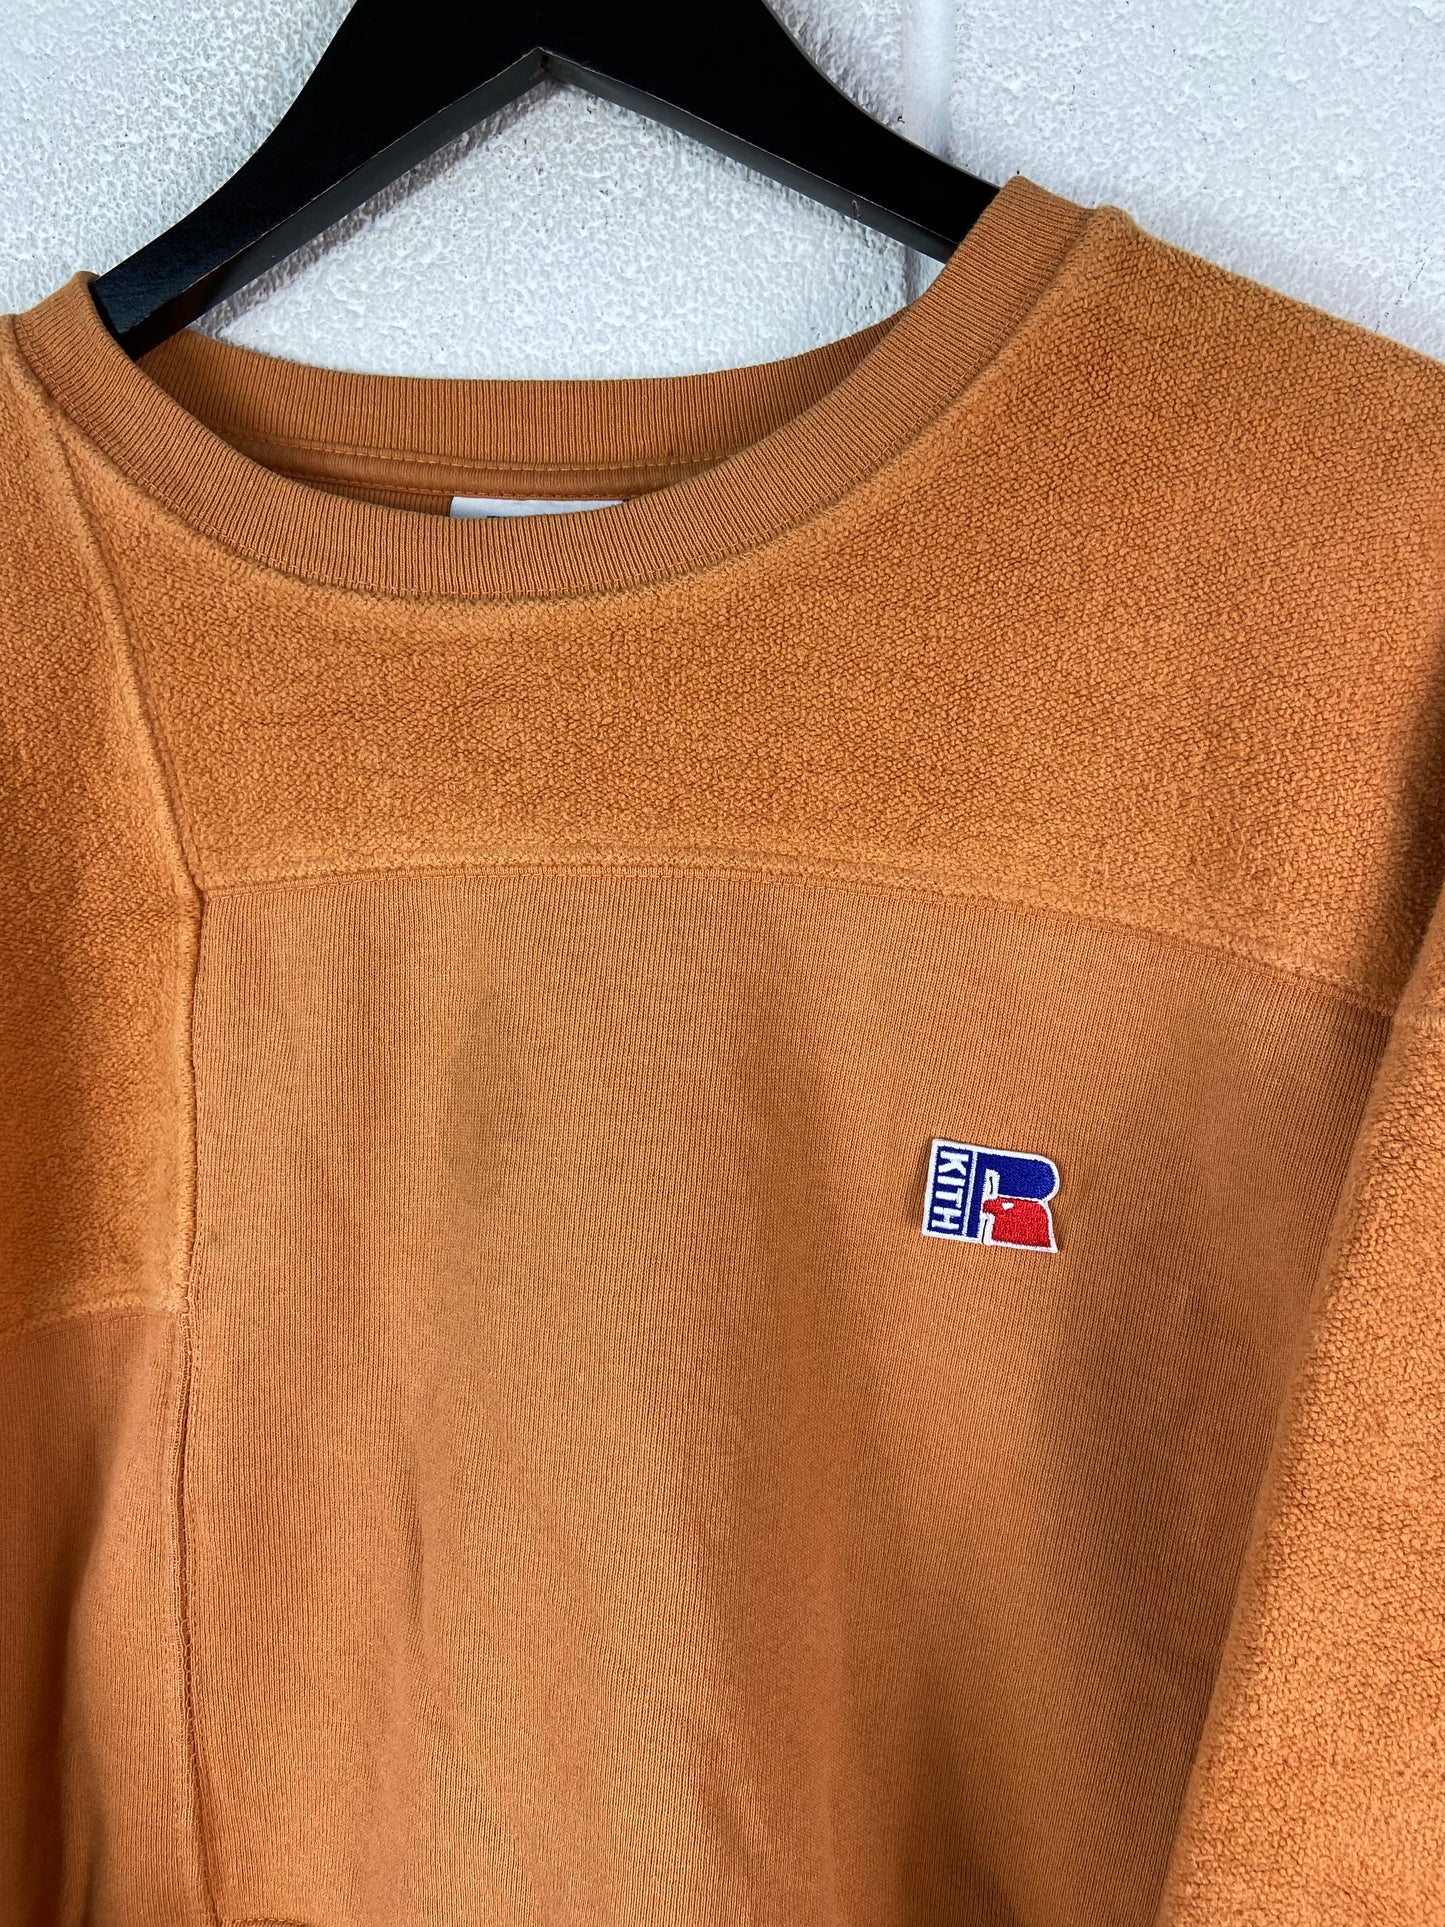 Kith Russell Athletic Orange Sweatshirt Sz XL/2XL